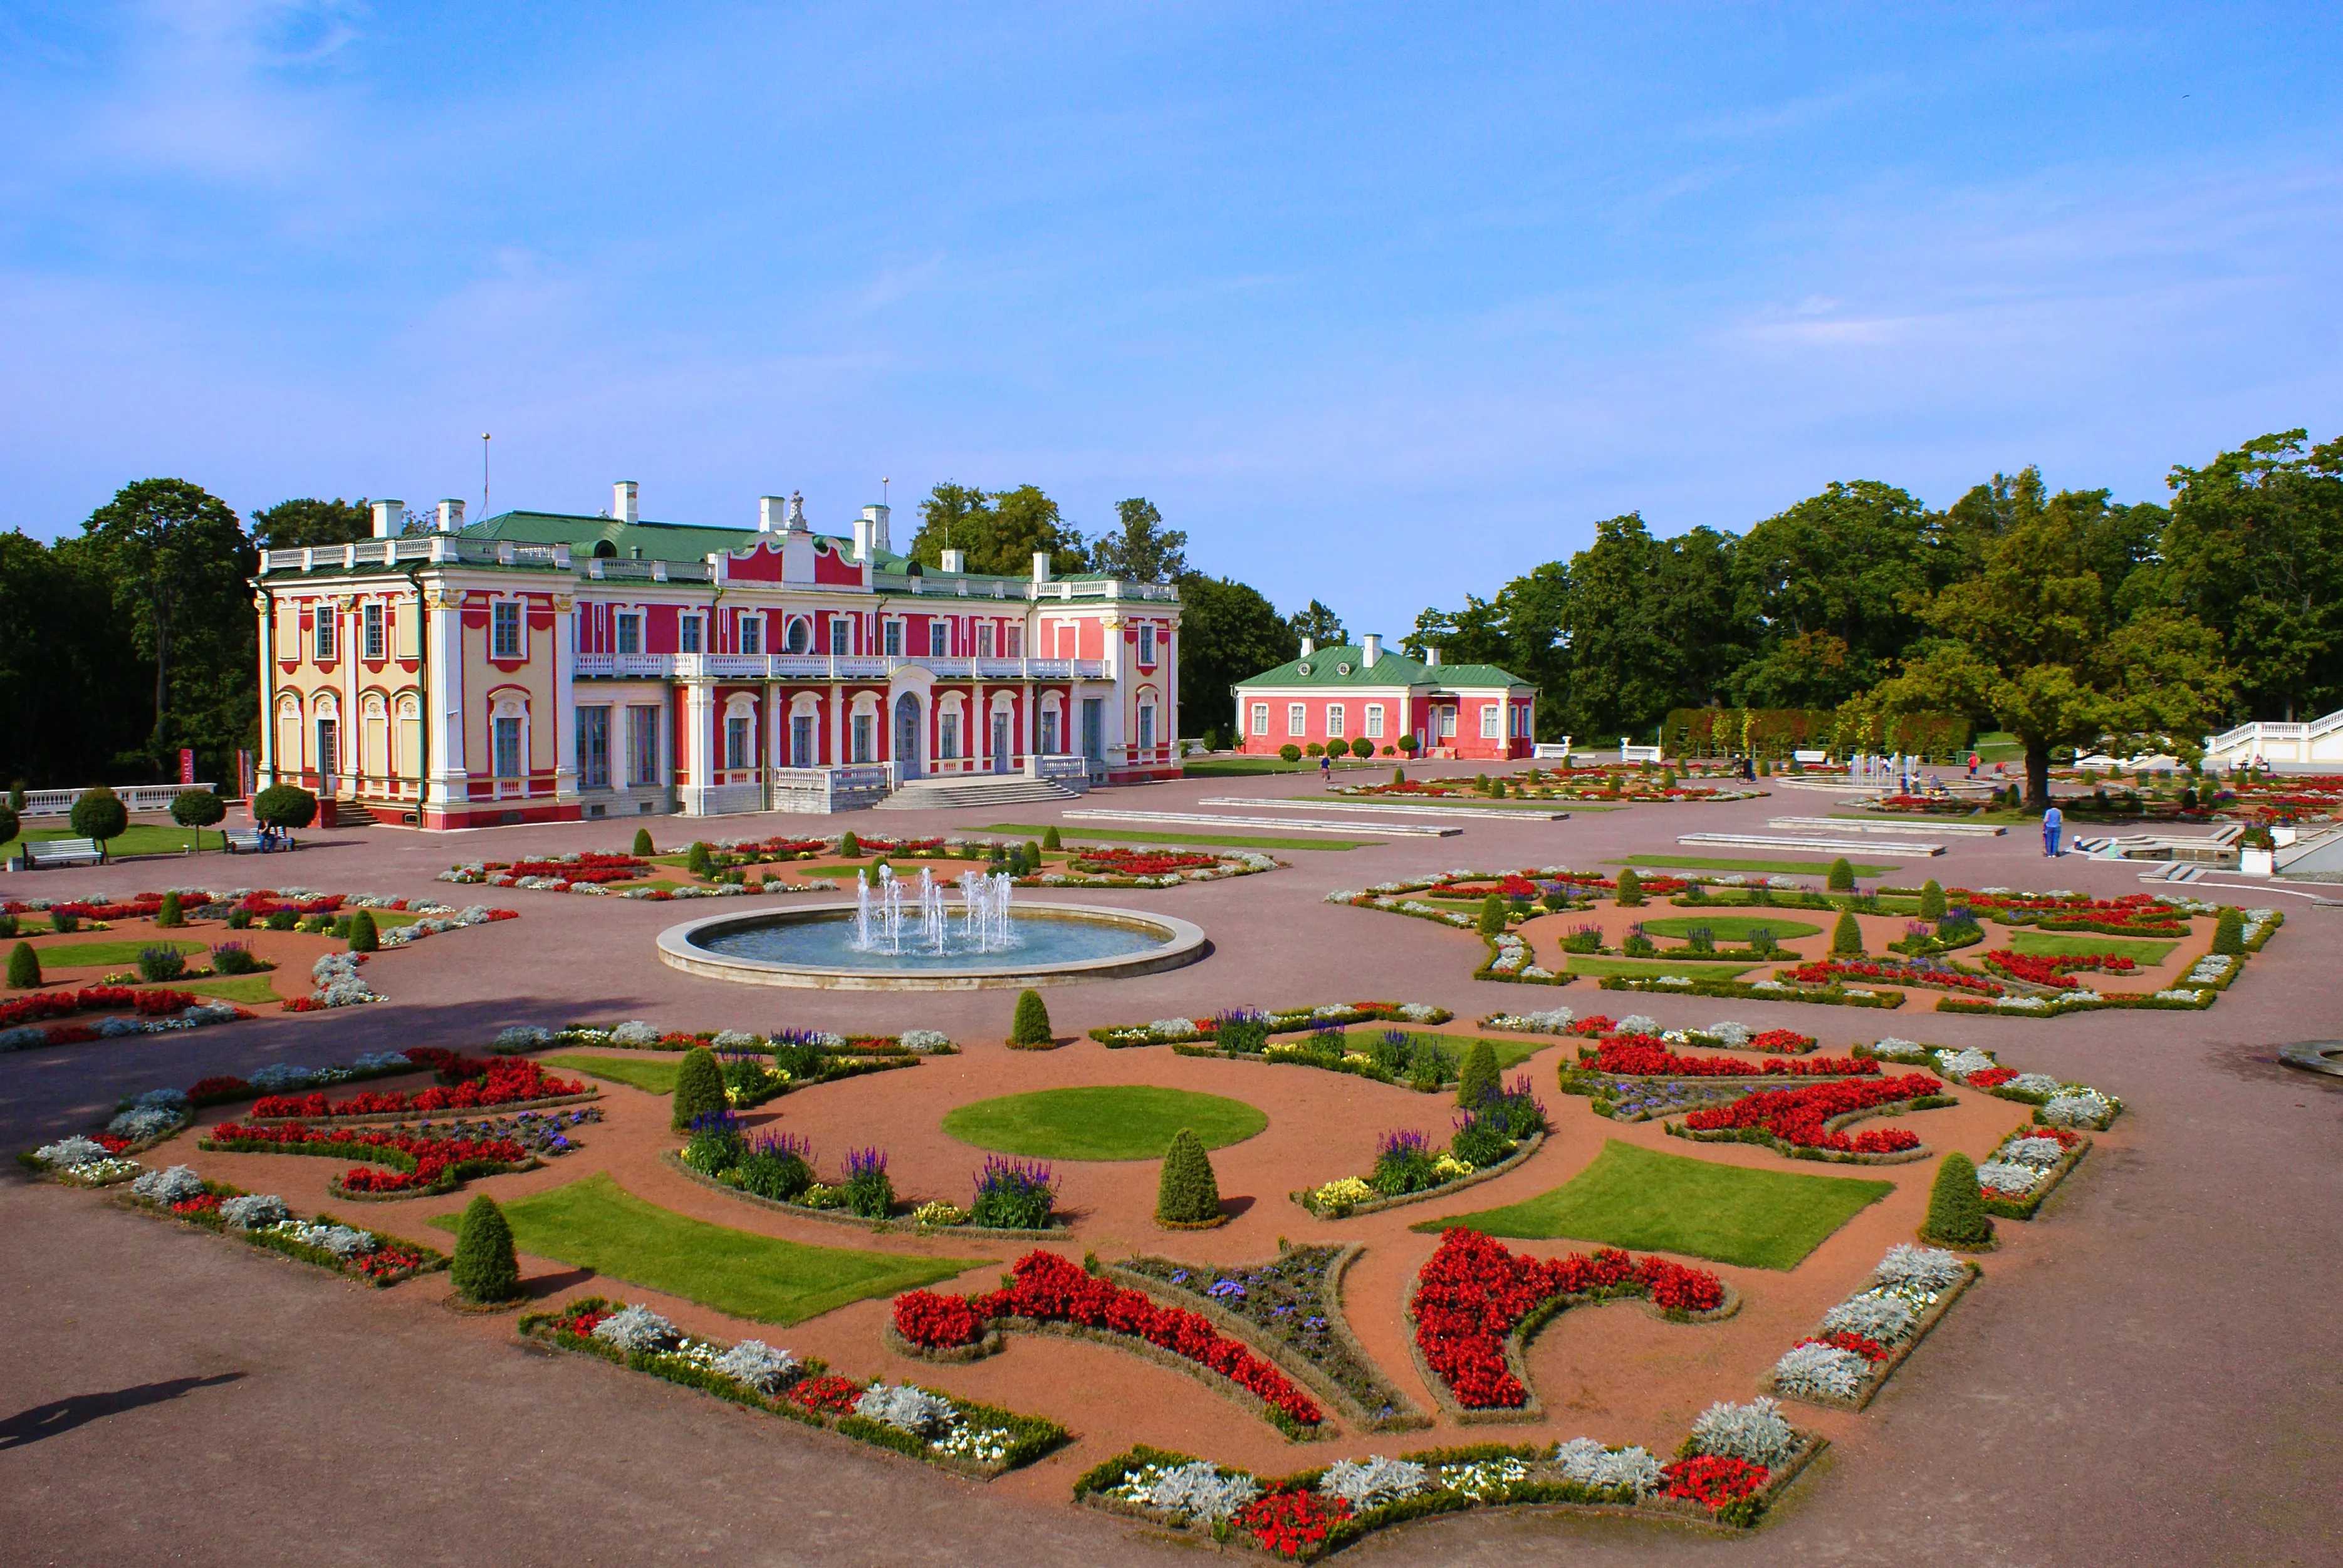 Kadriorg Park in Estonia, Europe | Parks,Gardens - Rated 4.5